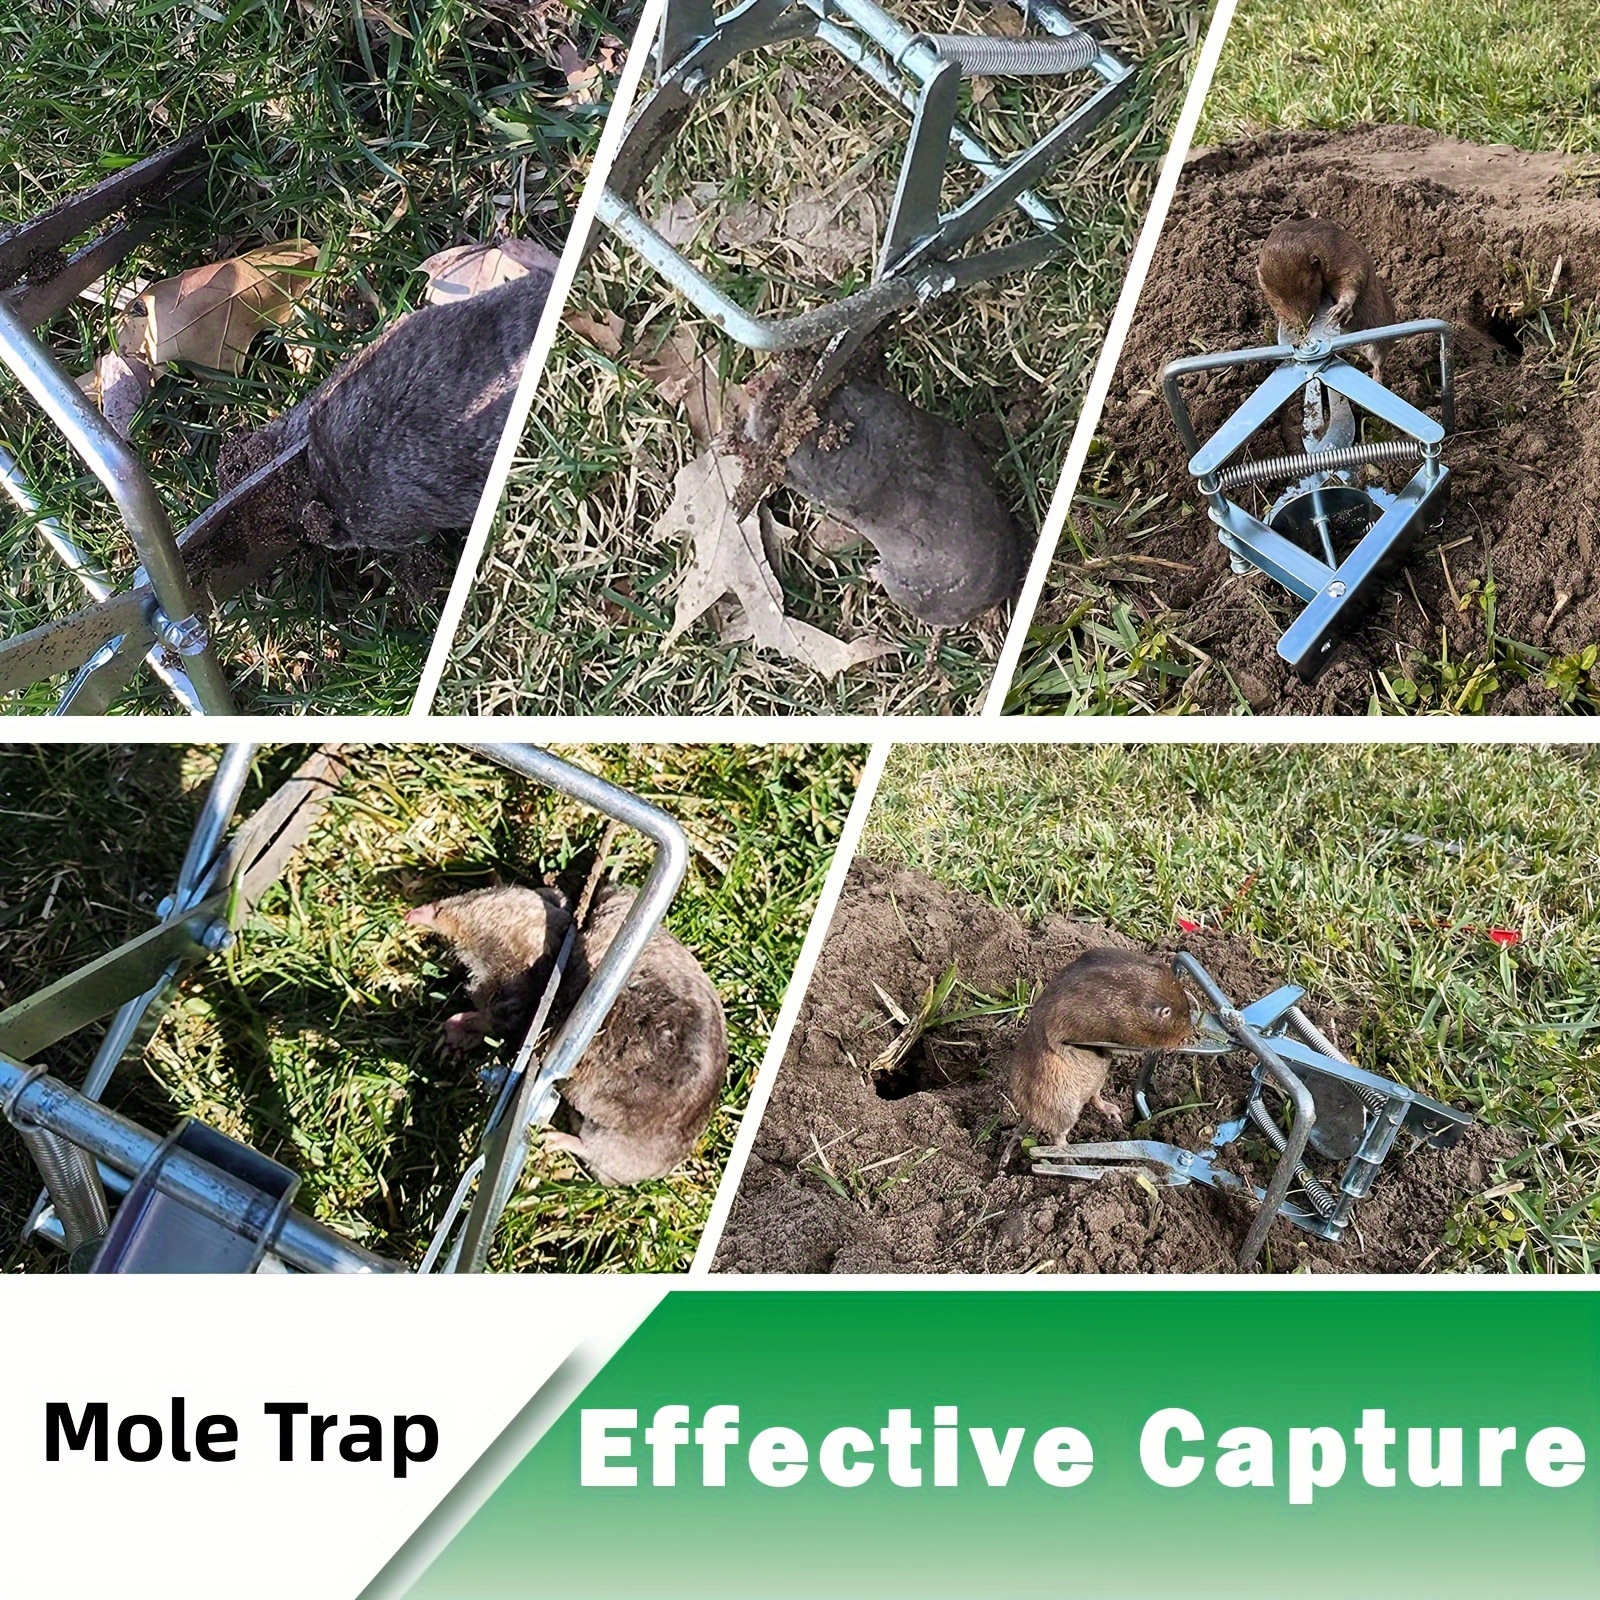 Wire Tek 1001 Easyset Mole Eliminator Trap (2 Pack), Mole Traps That Kill  Best, Scissor Mole Trap, Mole Killer for Lawns, Mole Traps for Lawns - Made